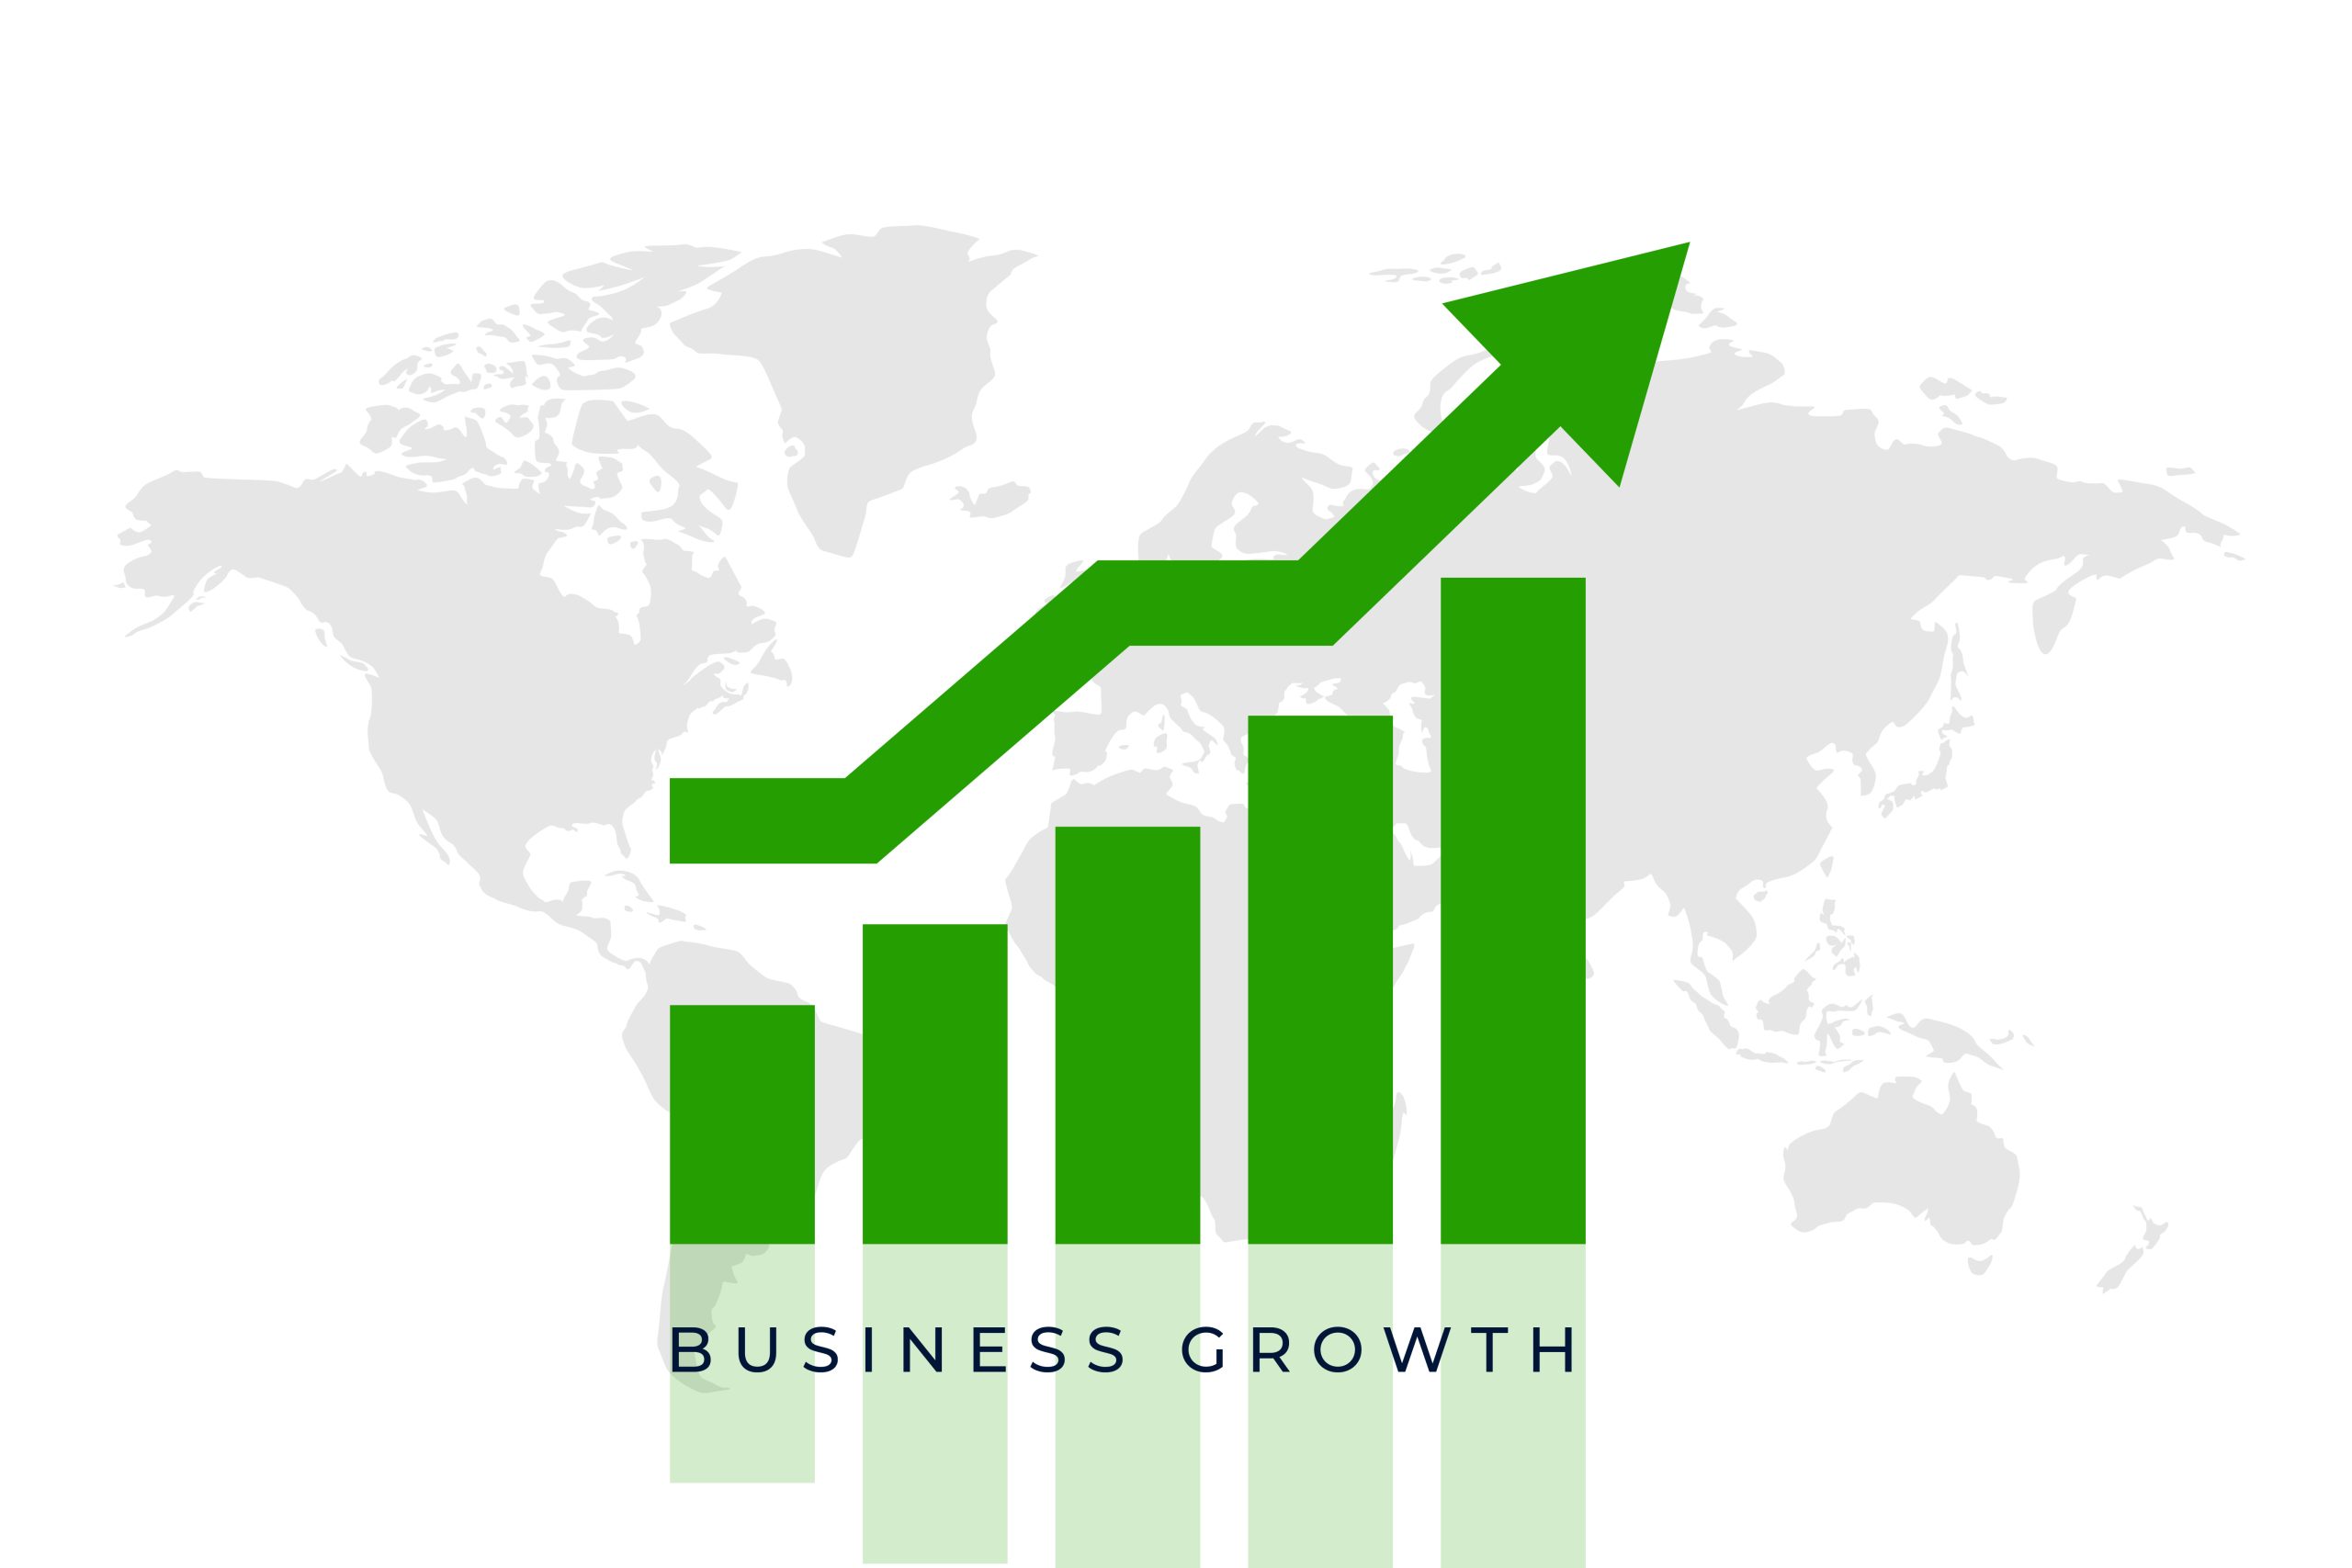 business share market growth green arrow background